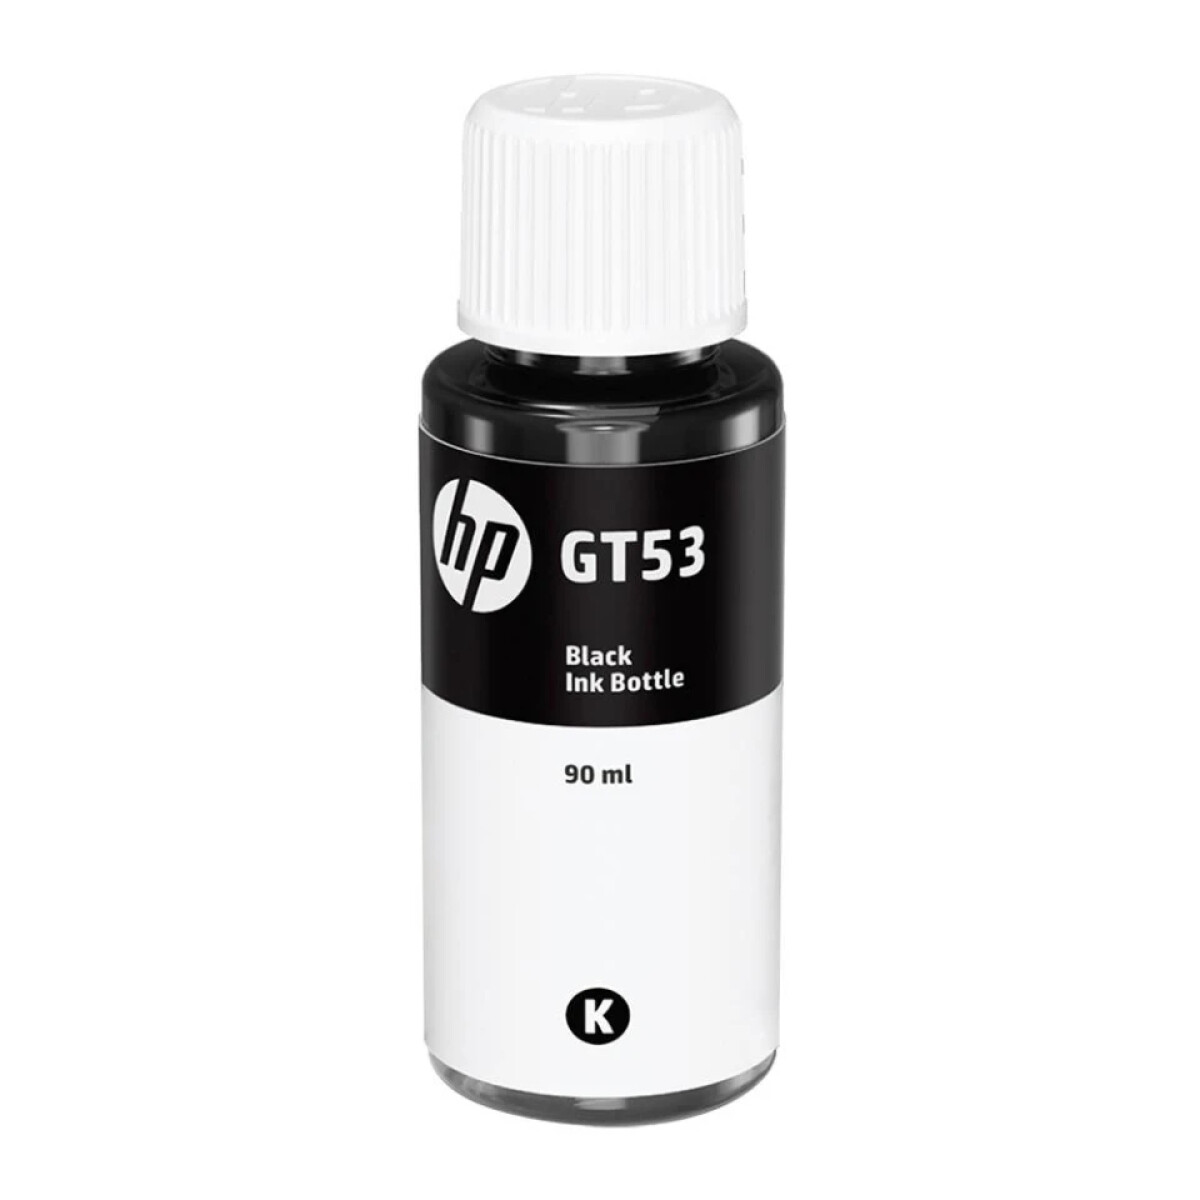 Recarga de Tinta para Impresora HP GT53 NEGRO Original - 2211 